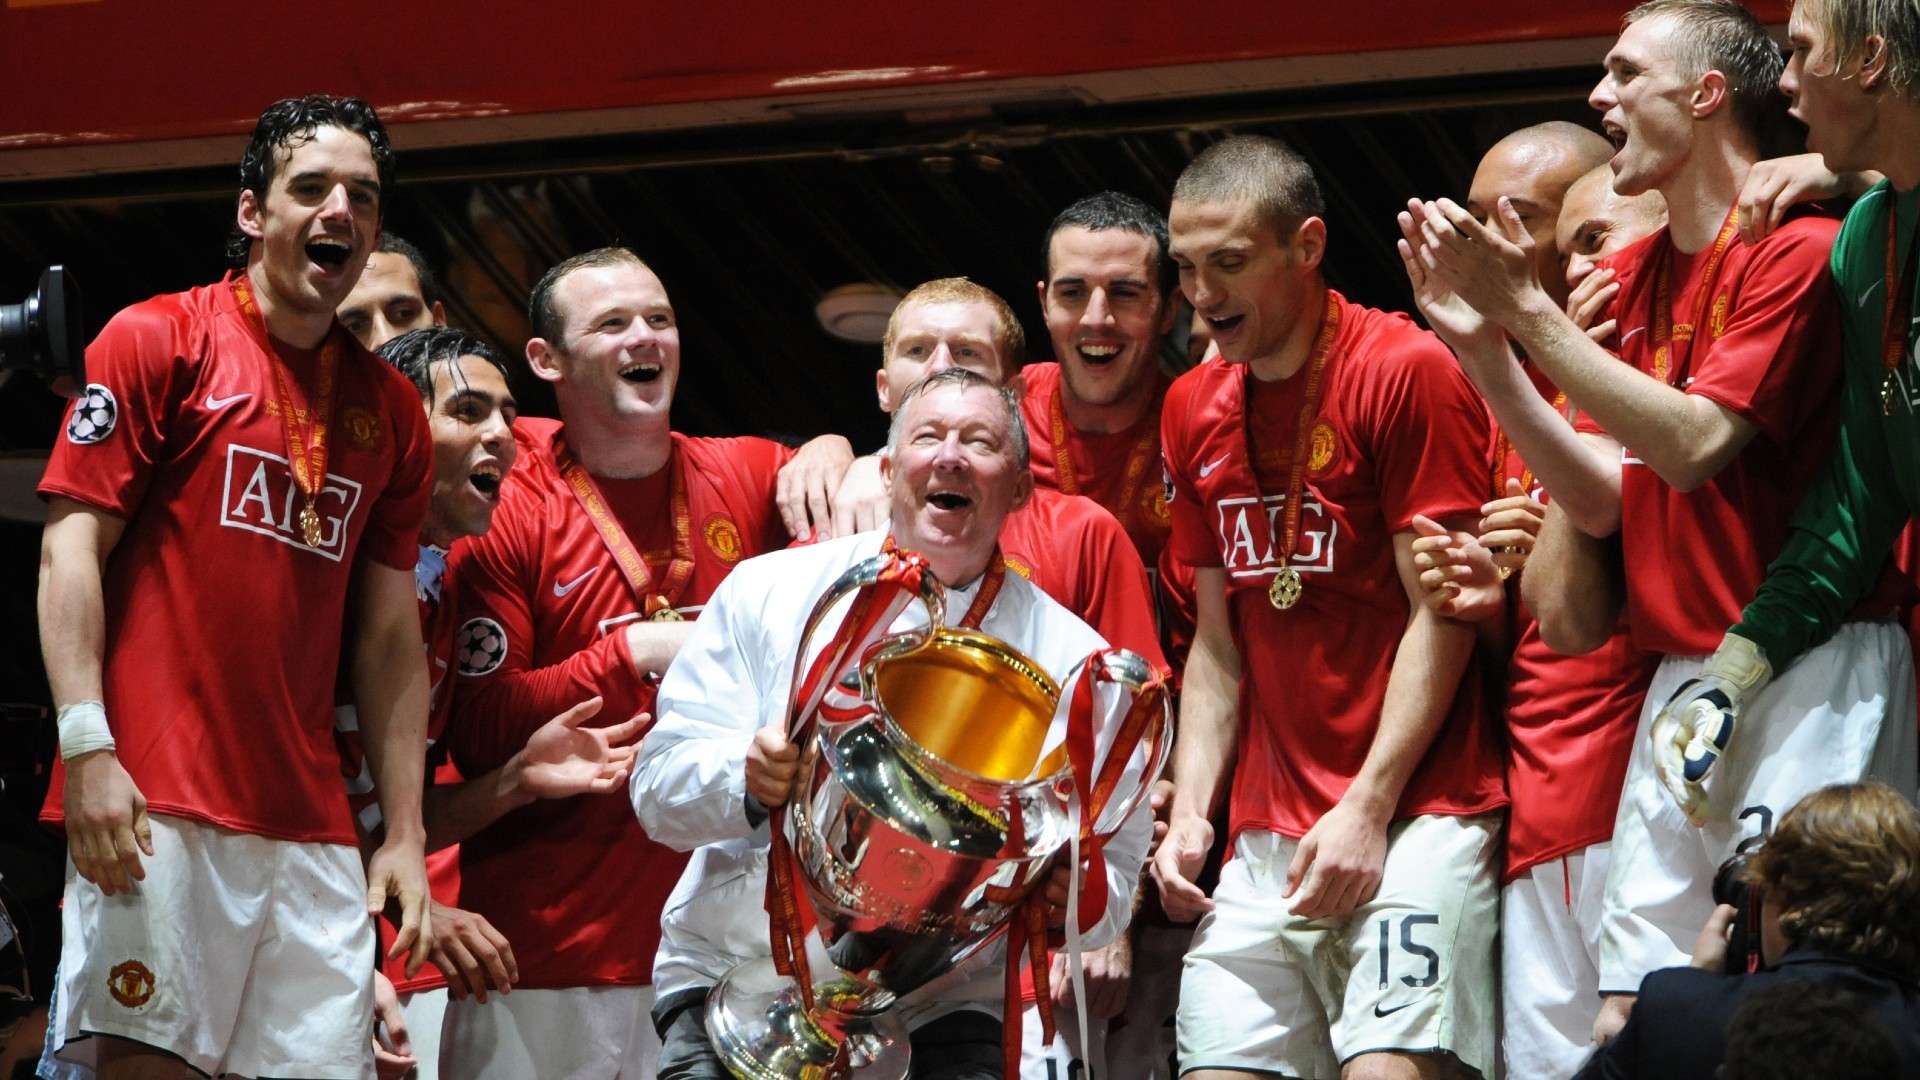 Sir Alex Ferguson Manchester United Champions League trophy 2008